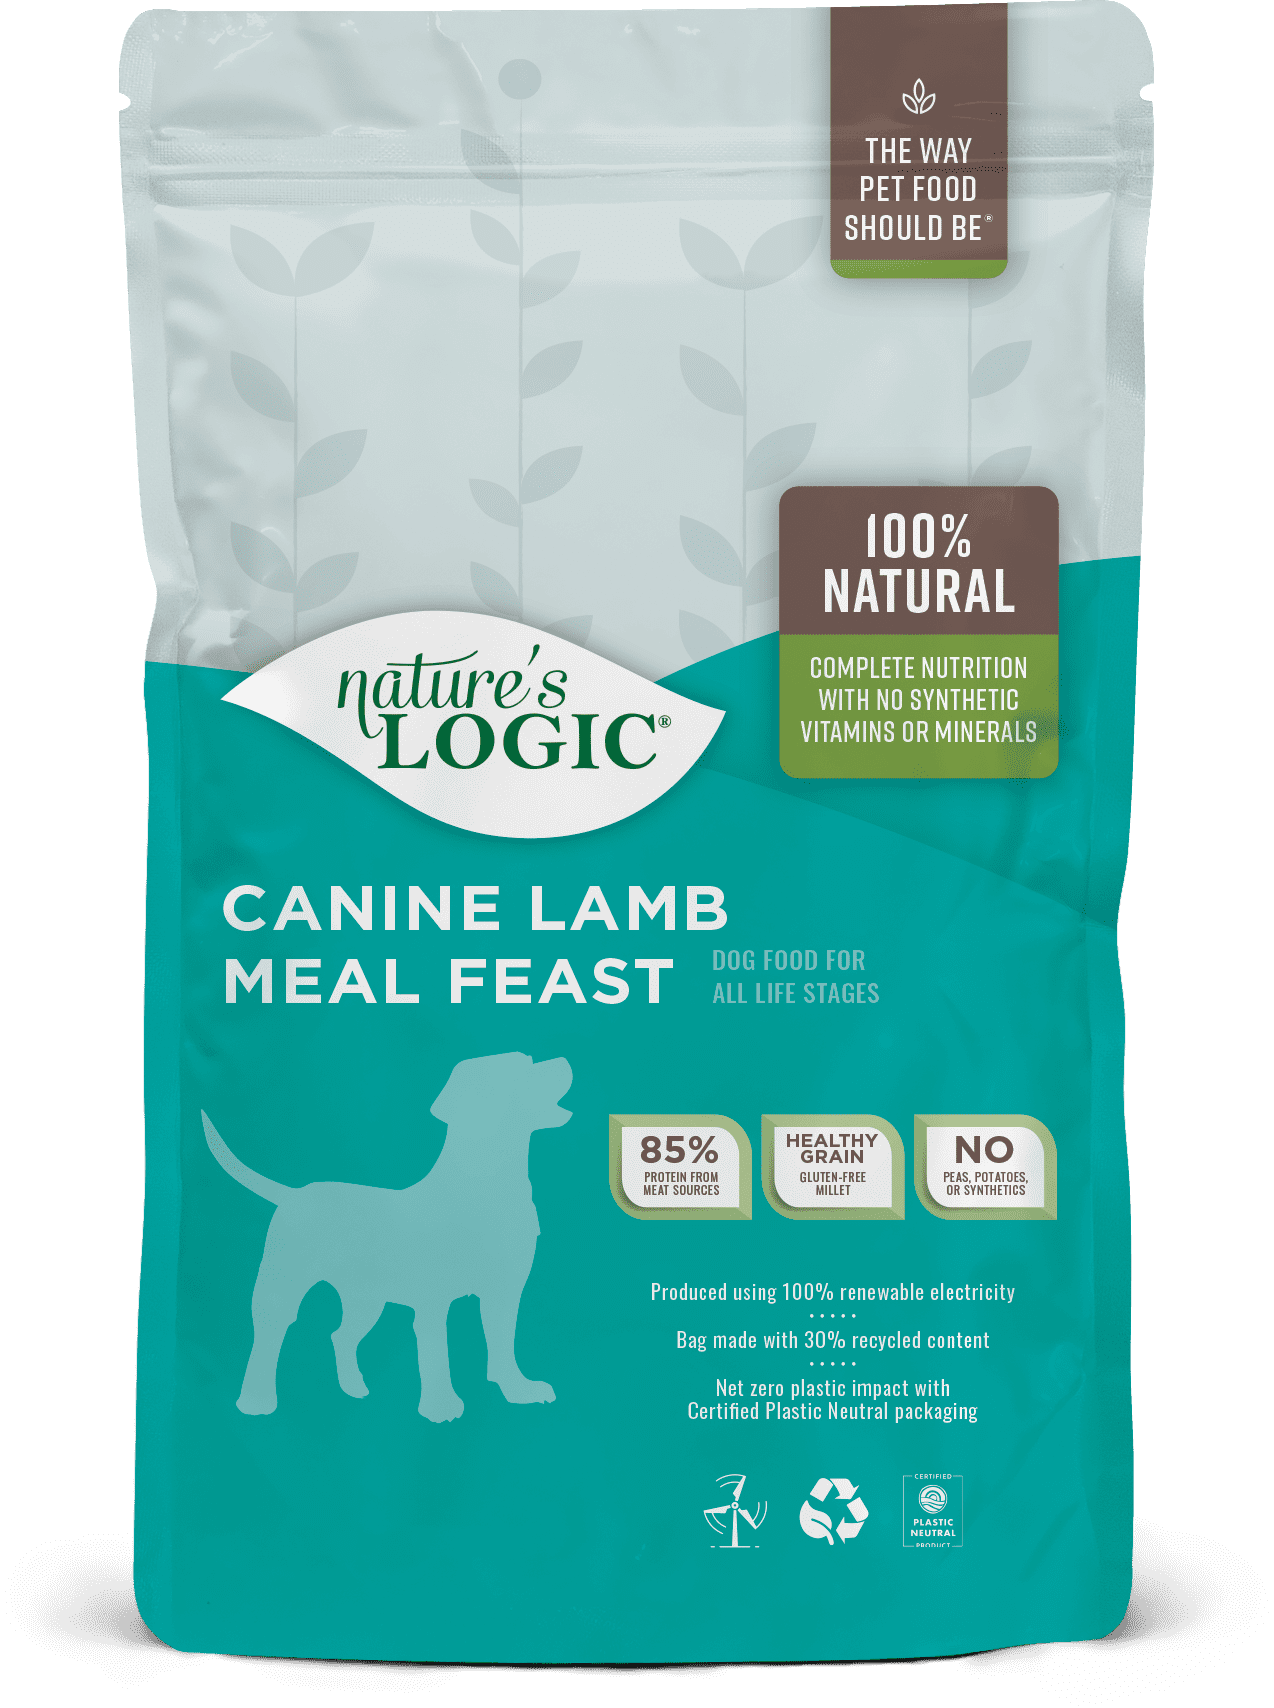 Nature's Logic Canine Lamb Meal Feast bag.